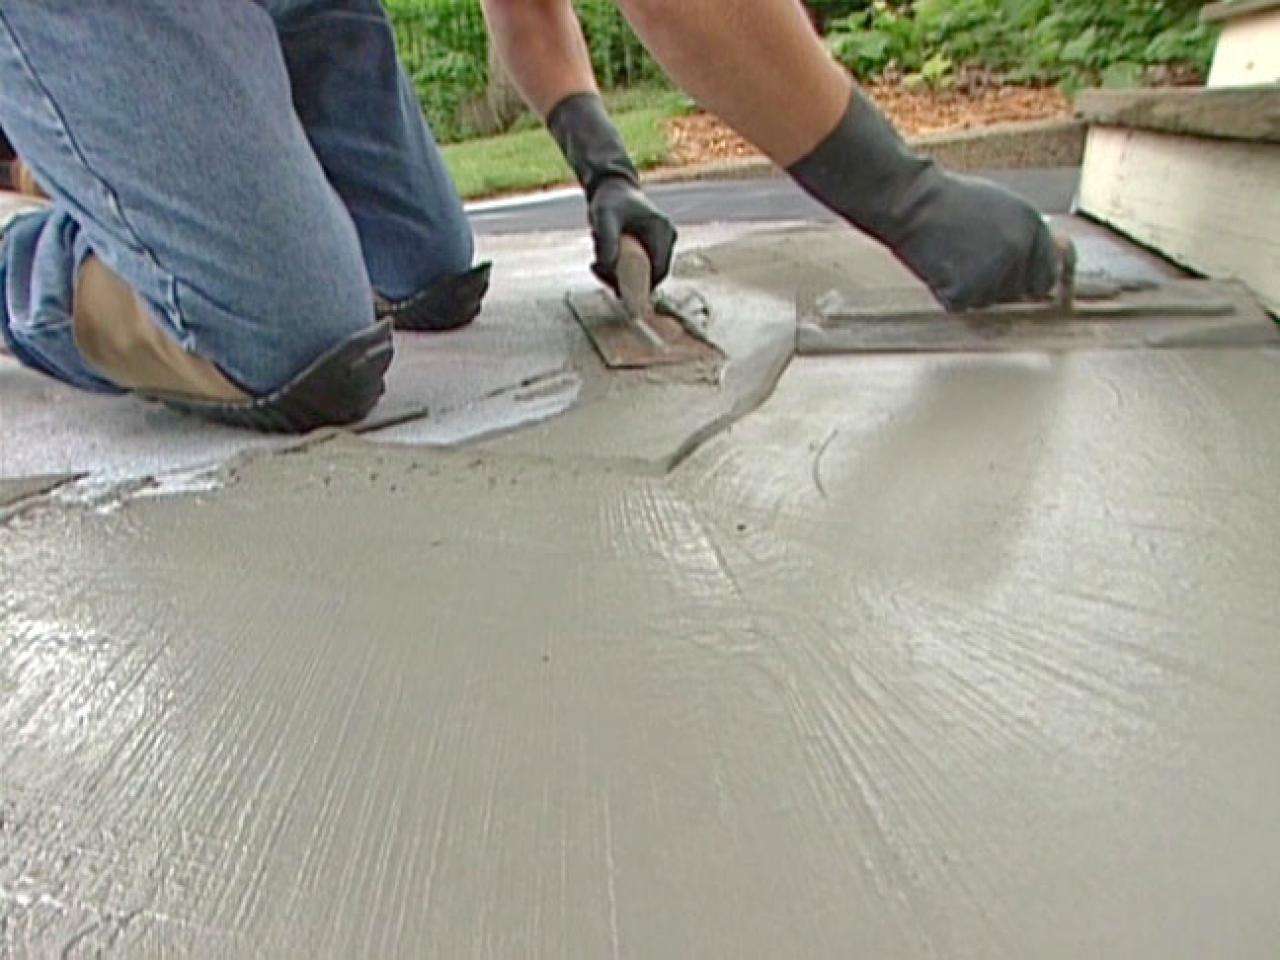 How To Smooth Rough Concrete Patio